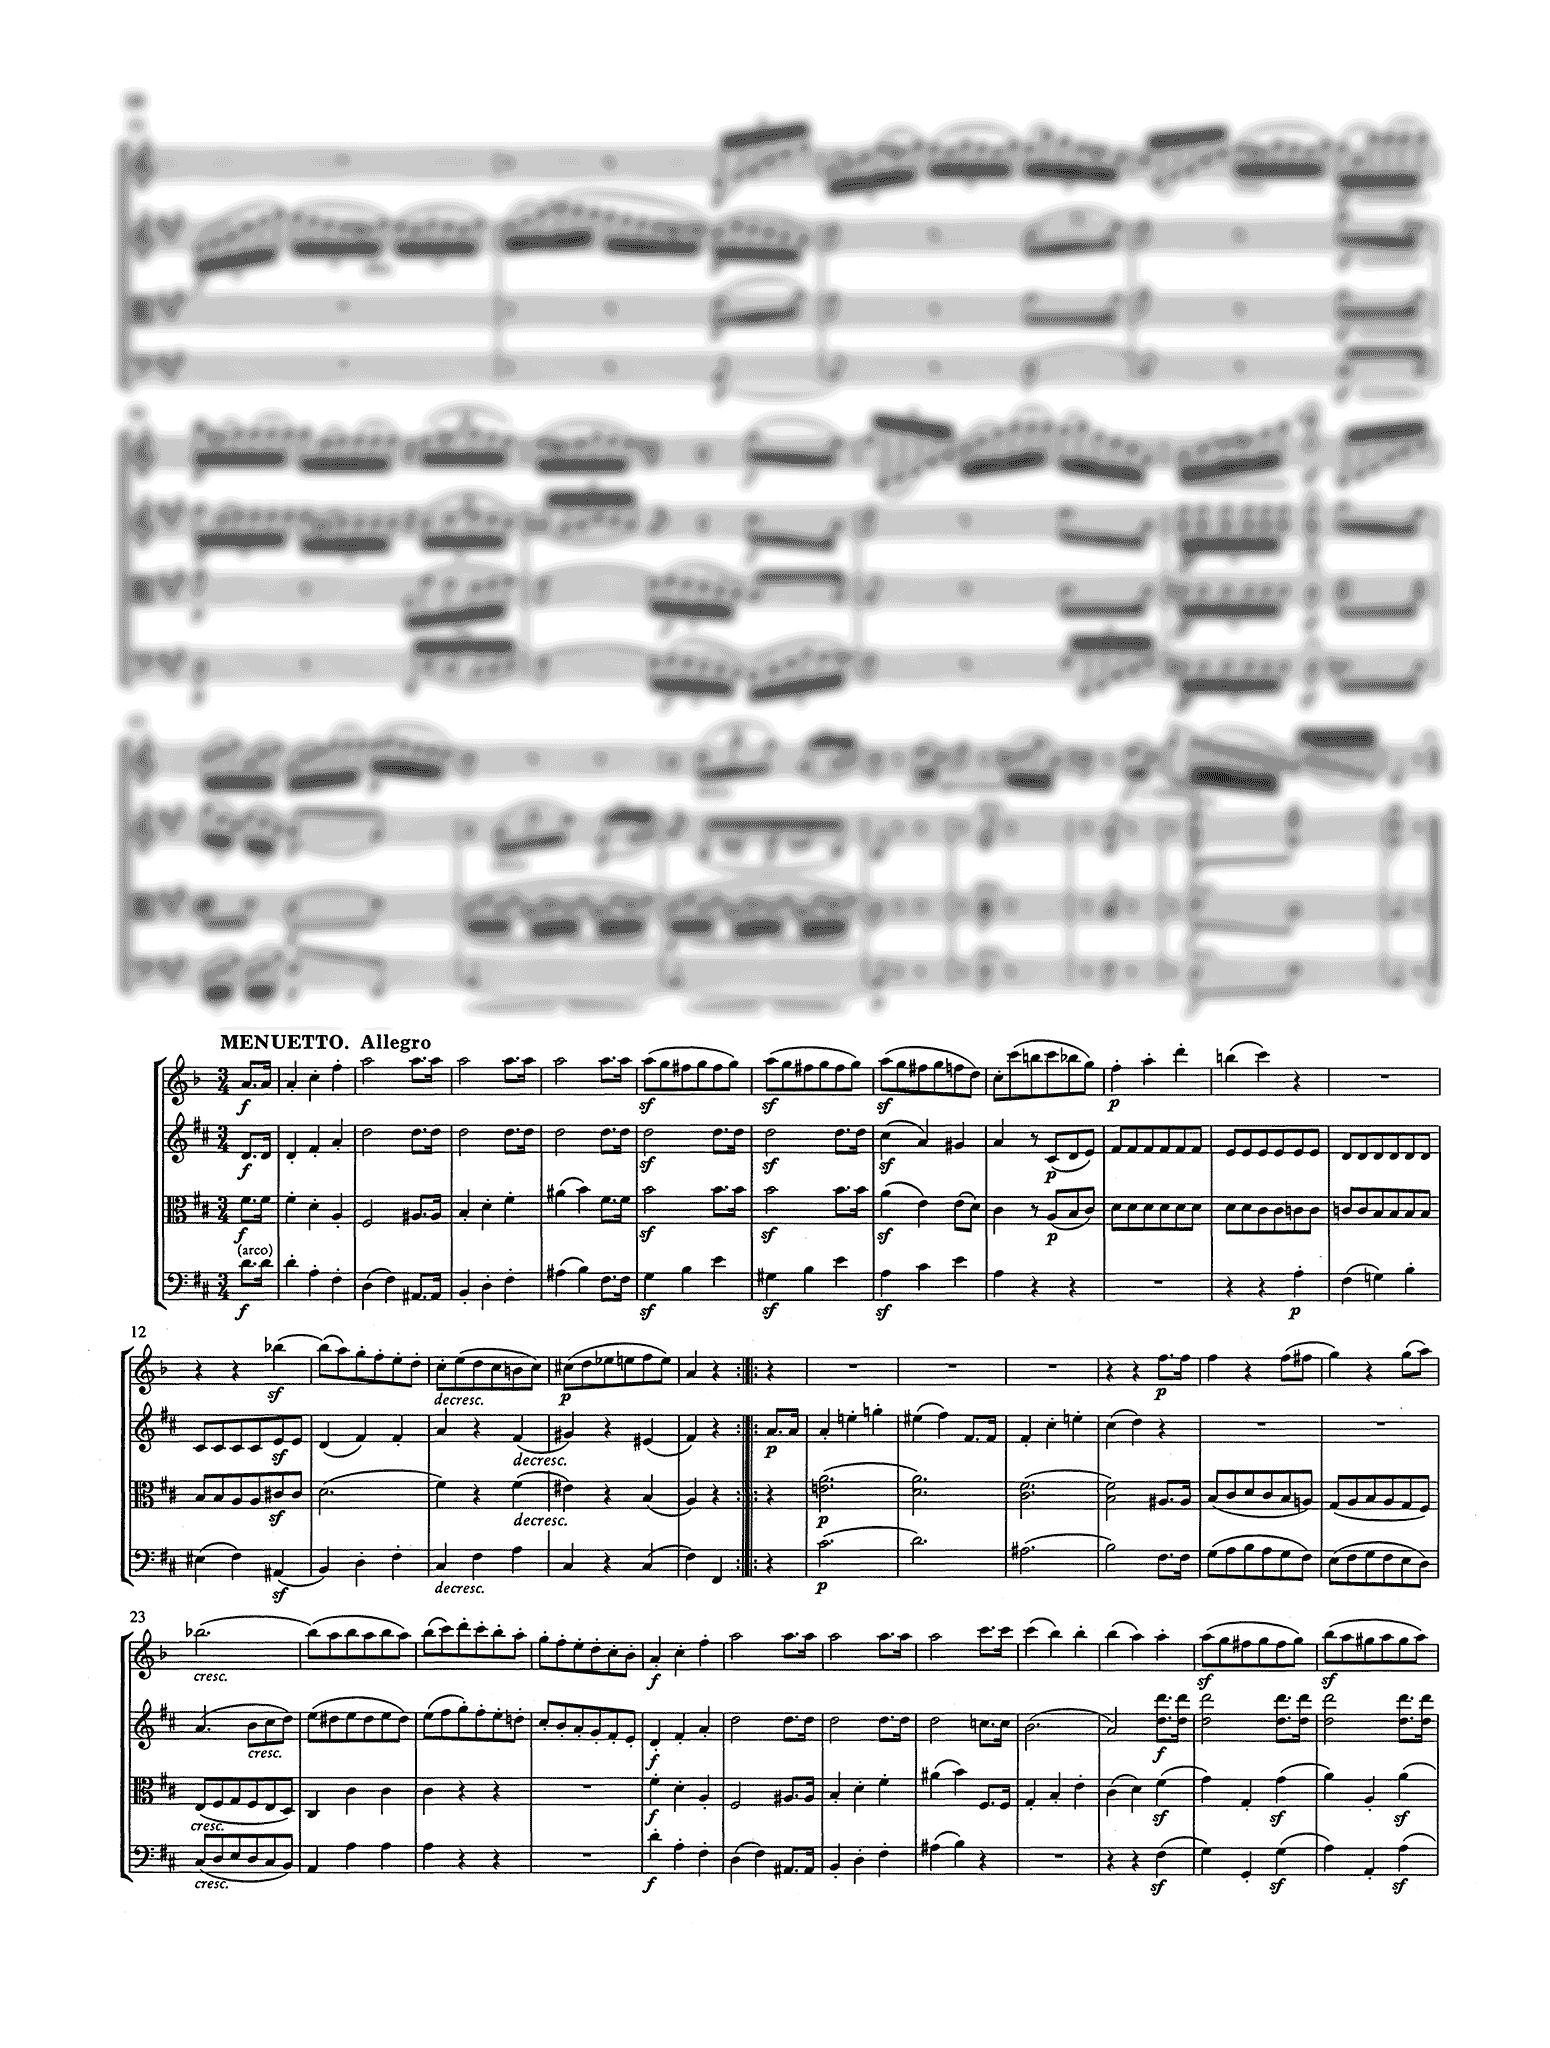 Crusell Clarinet Quartet No. 3 in D Major, Op. 7 - Movement 3